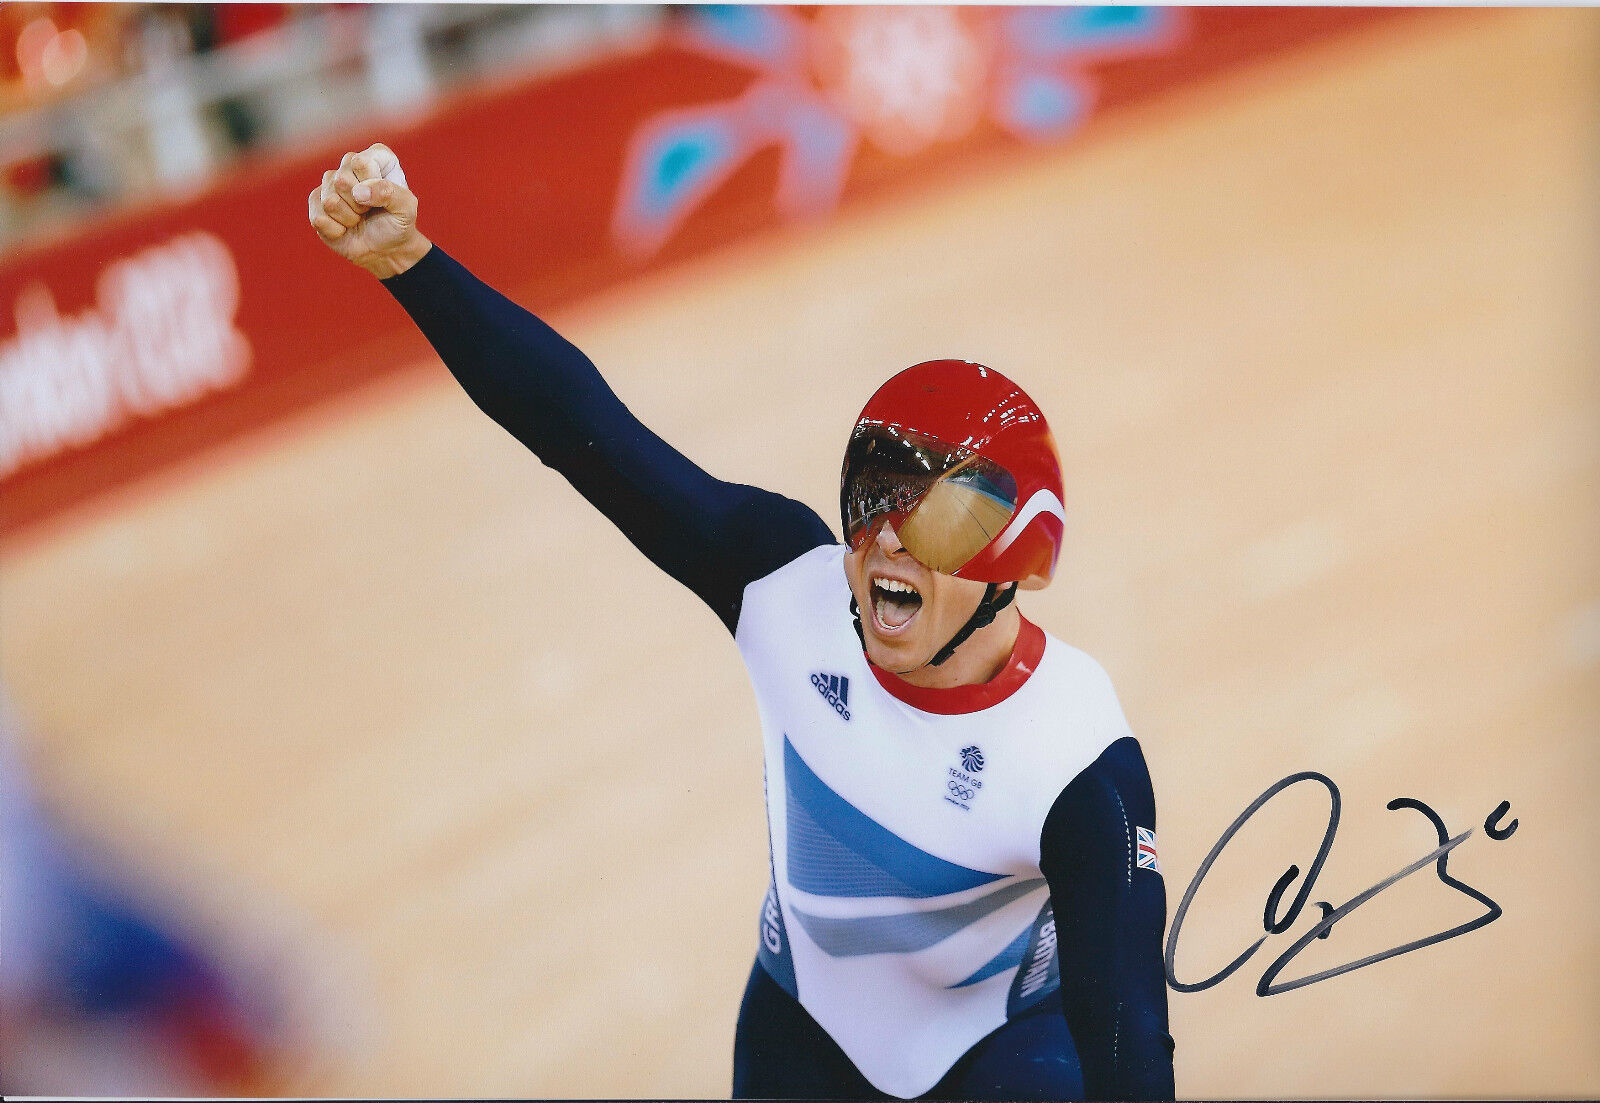 Sir Chris Hoy Signed 12x8 Autograph Photo Poster painting AFTAL COA Team Sprint World Champion